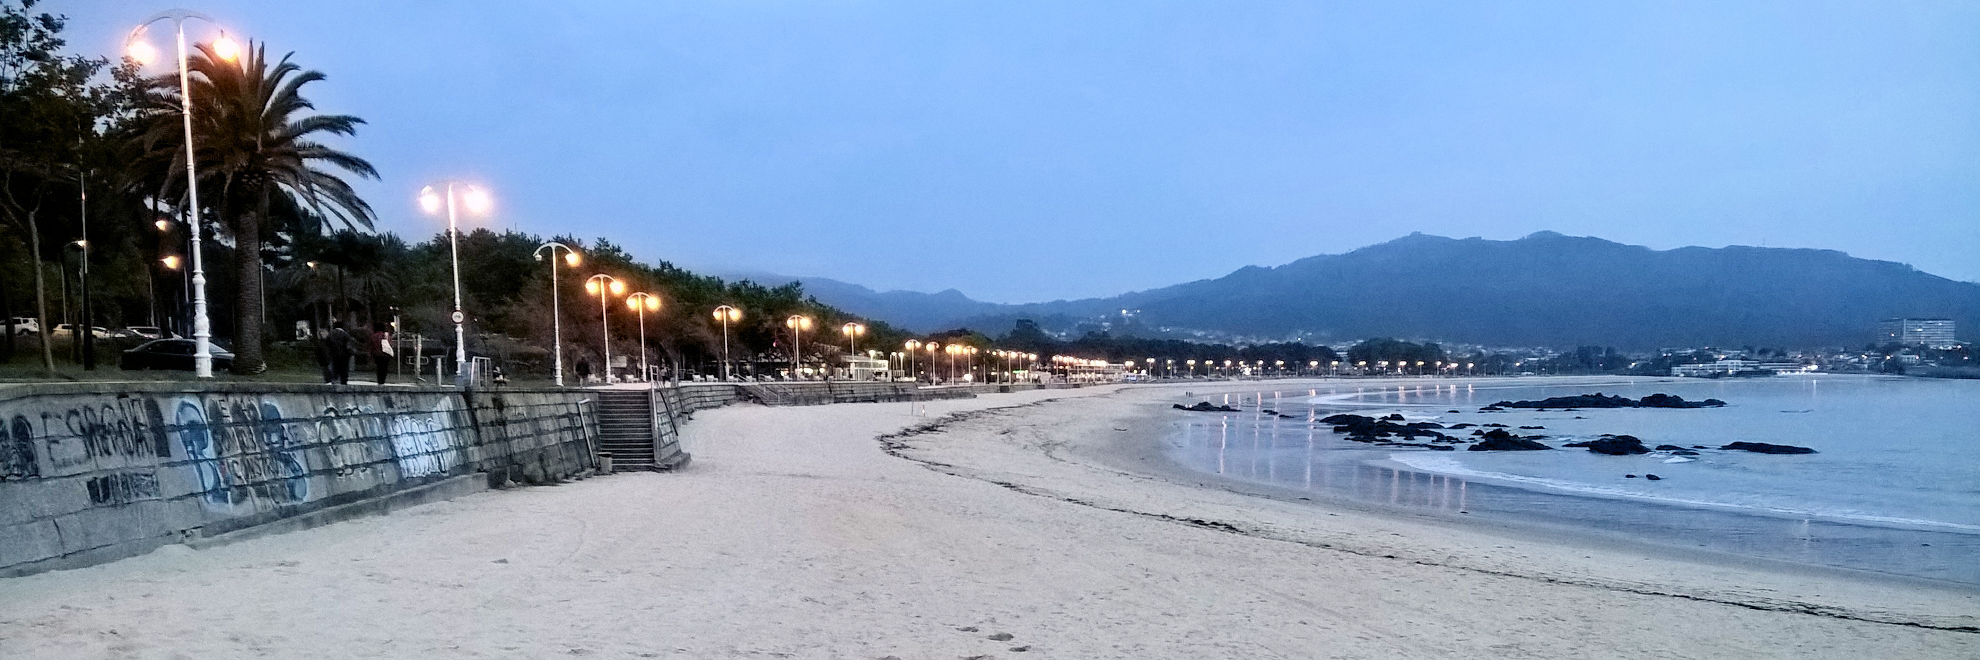 Vigo: Praia de Samil